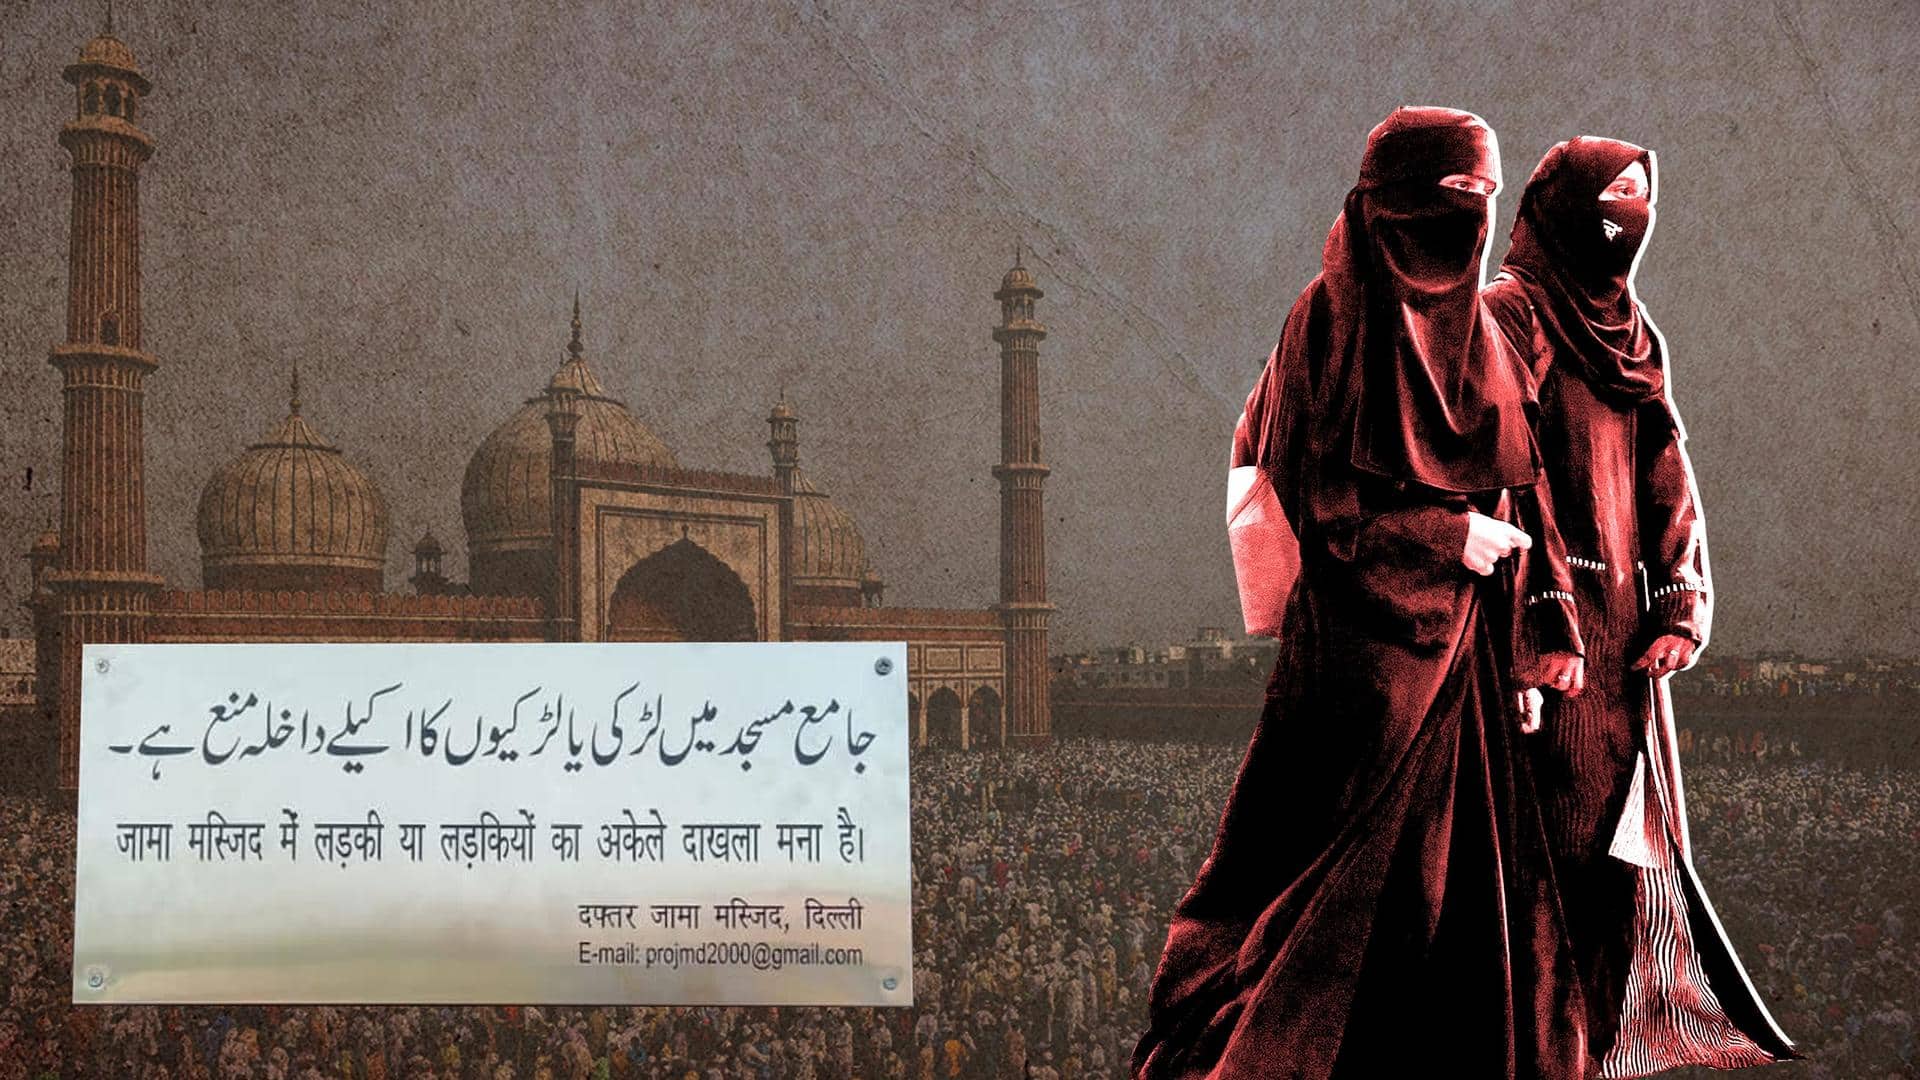 Jama Masjid bans entry of unaccompanied women: Report